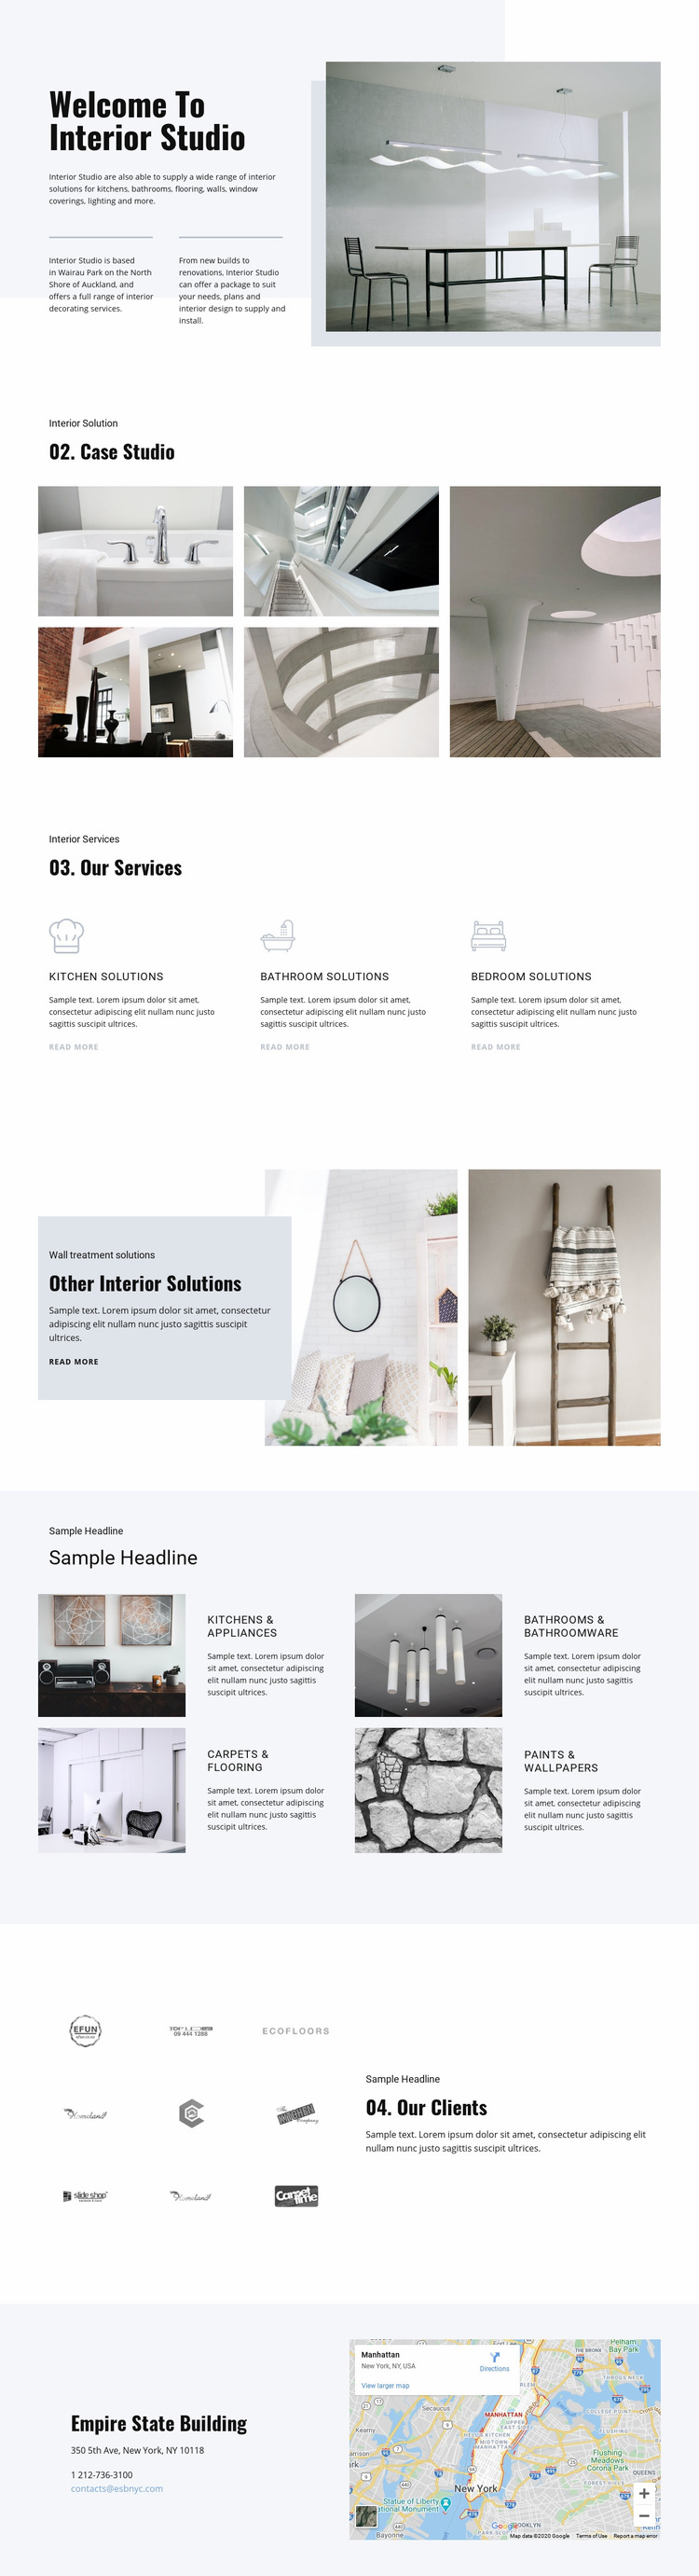 Welcome to interior studio Web Page Design